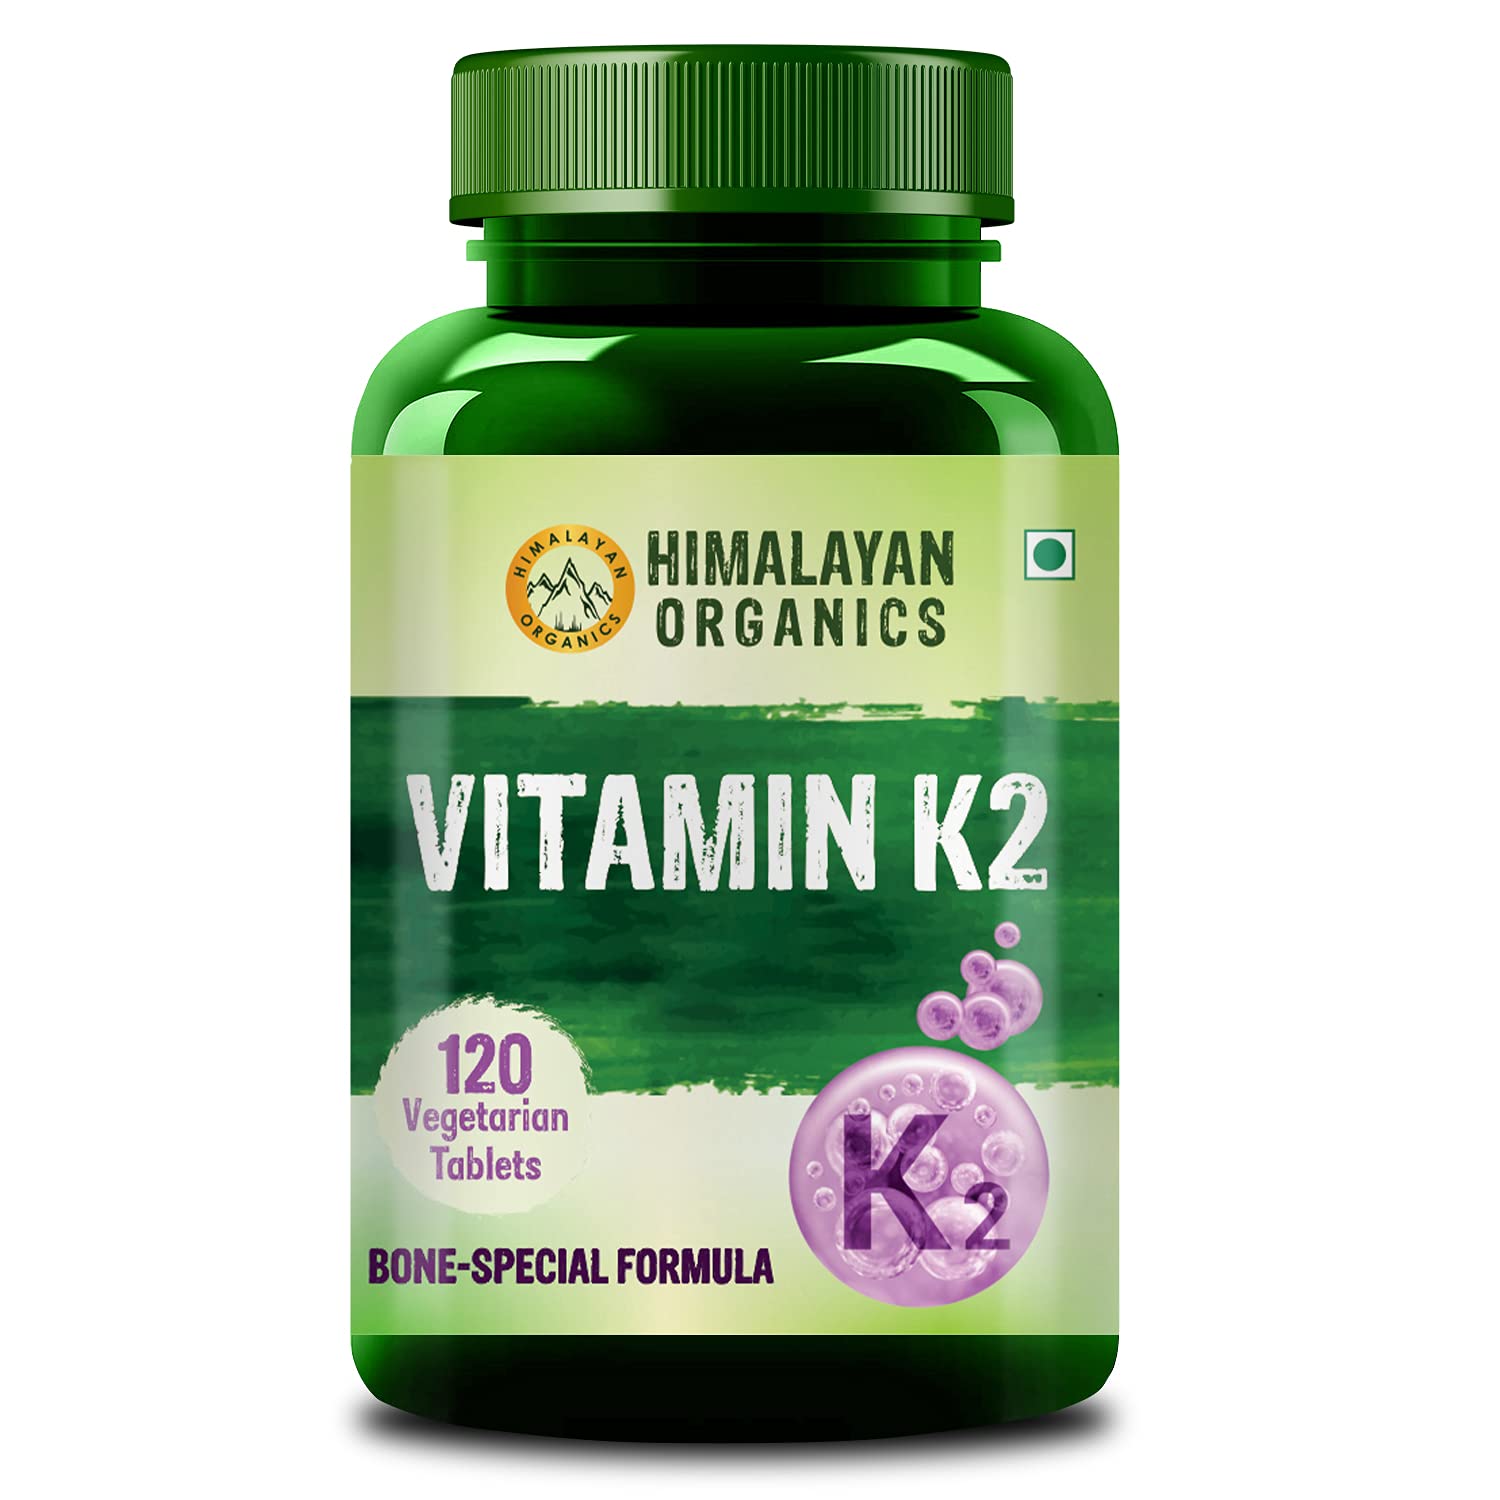 Himalayan Organics Vitamin K2 Tablets Image